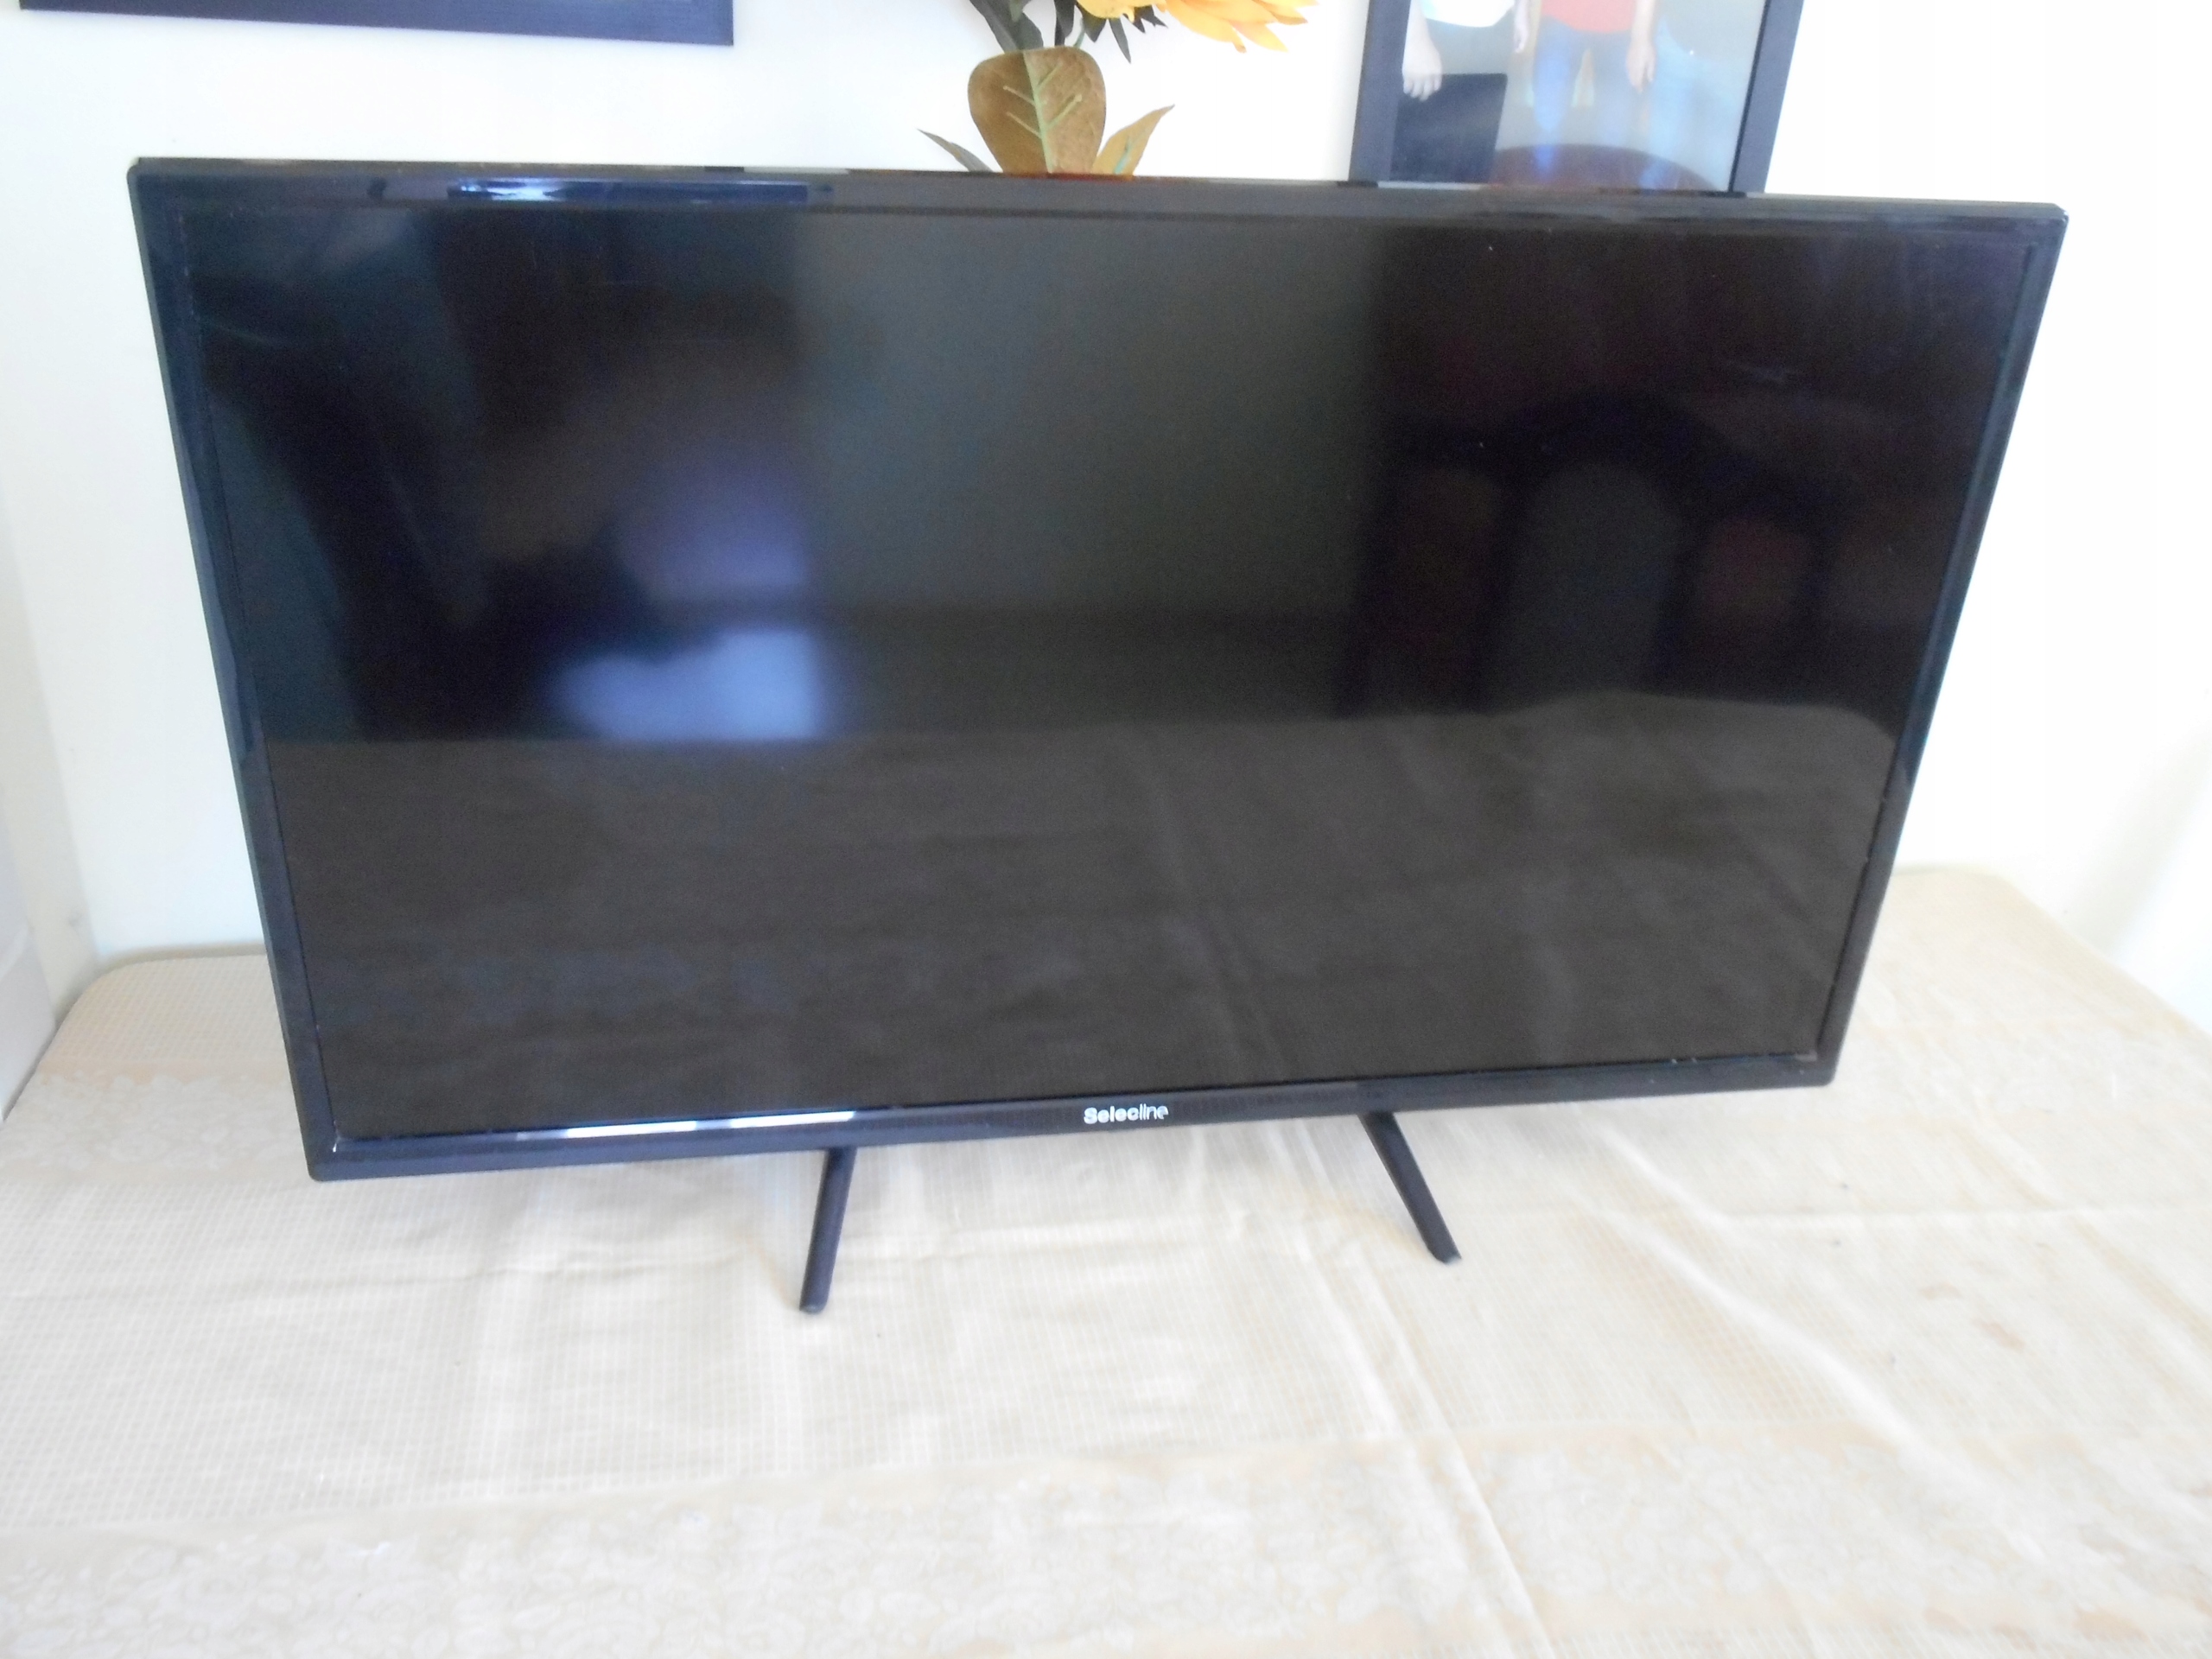 SELECLINE LE-2219D TV LED Full HD 54 cm pas cher 